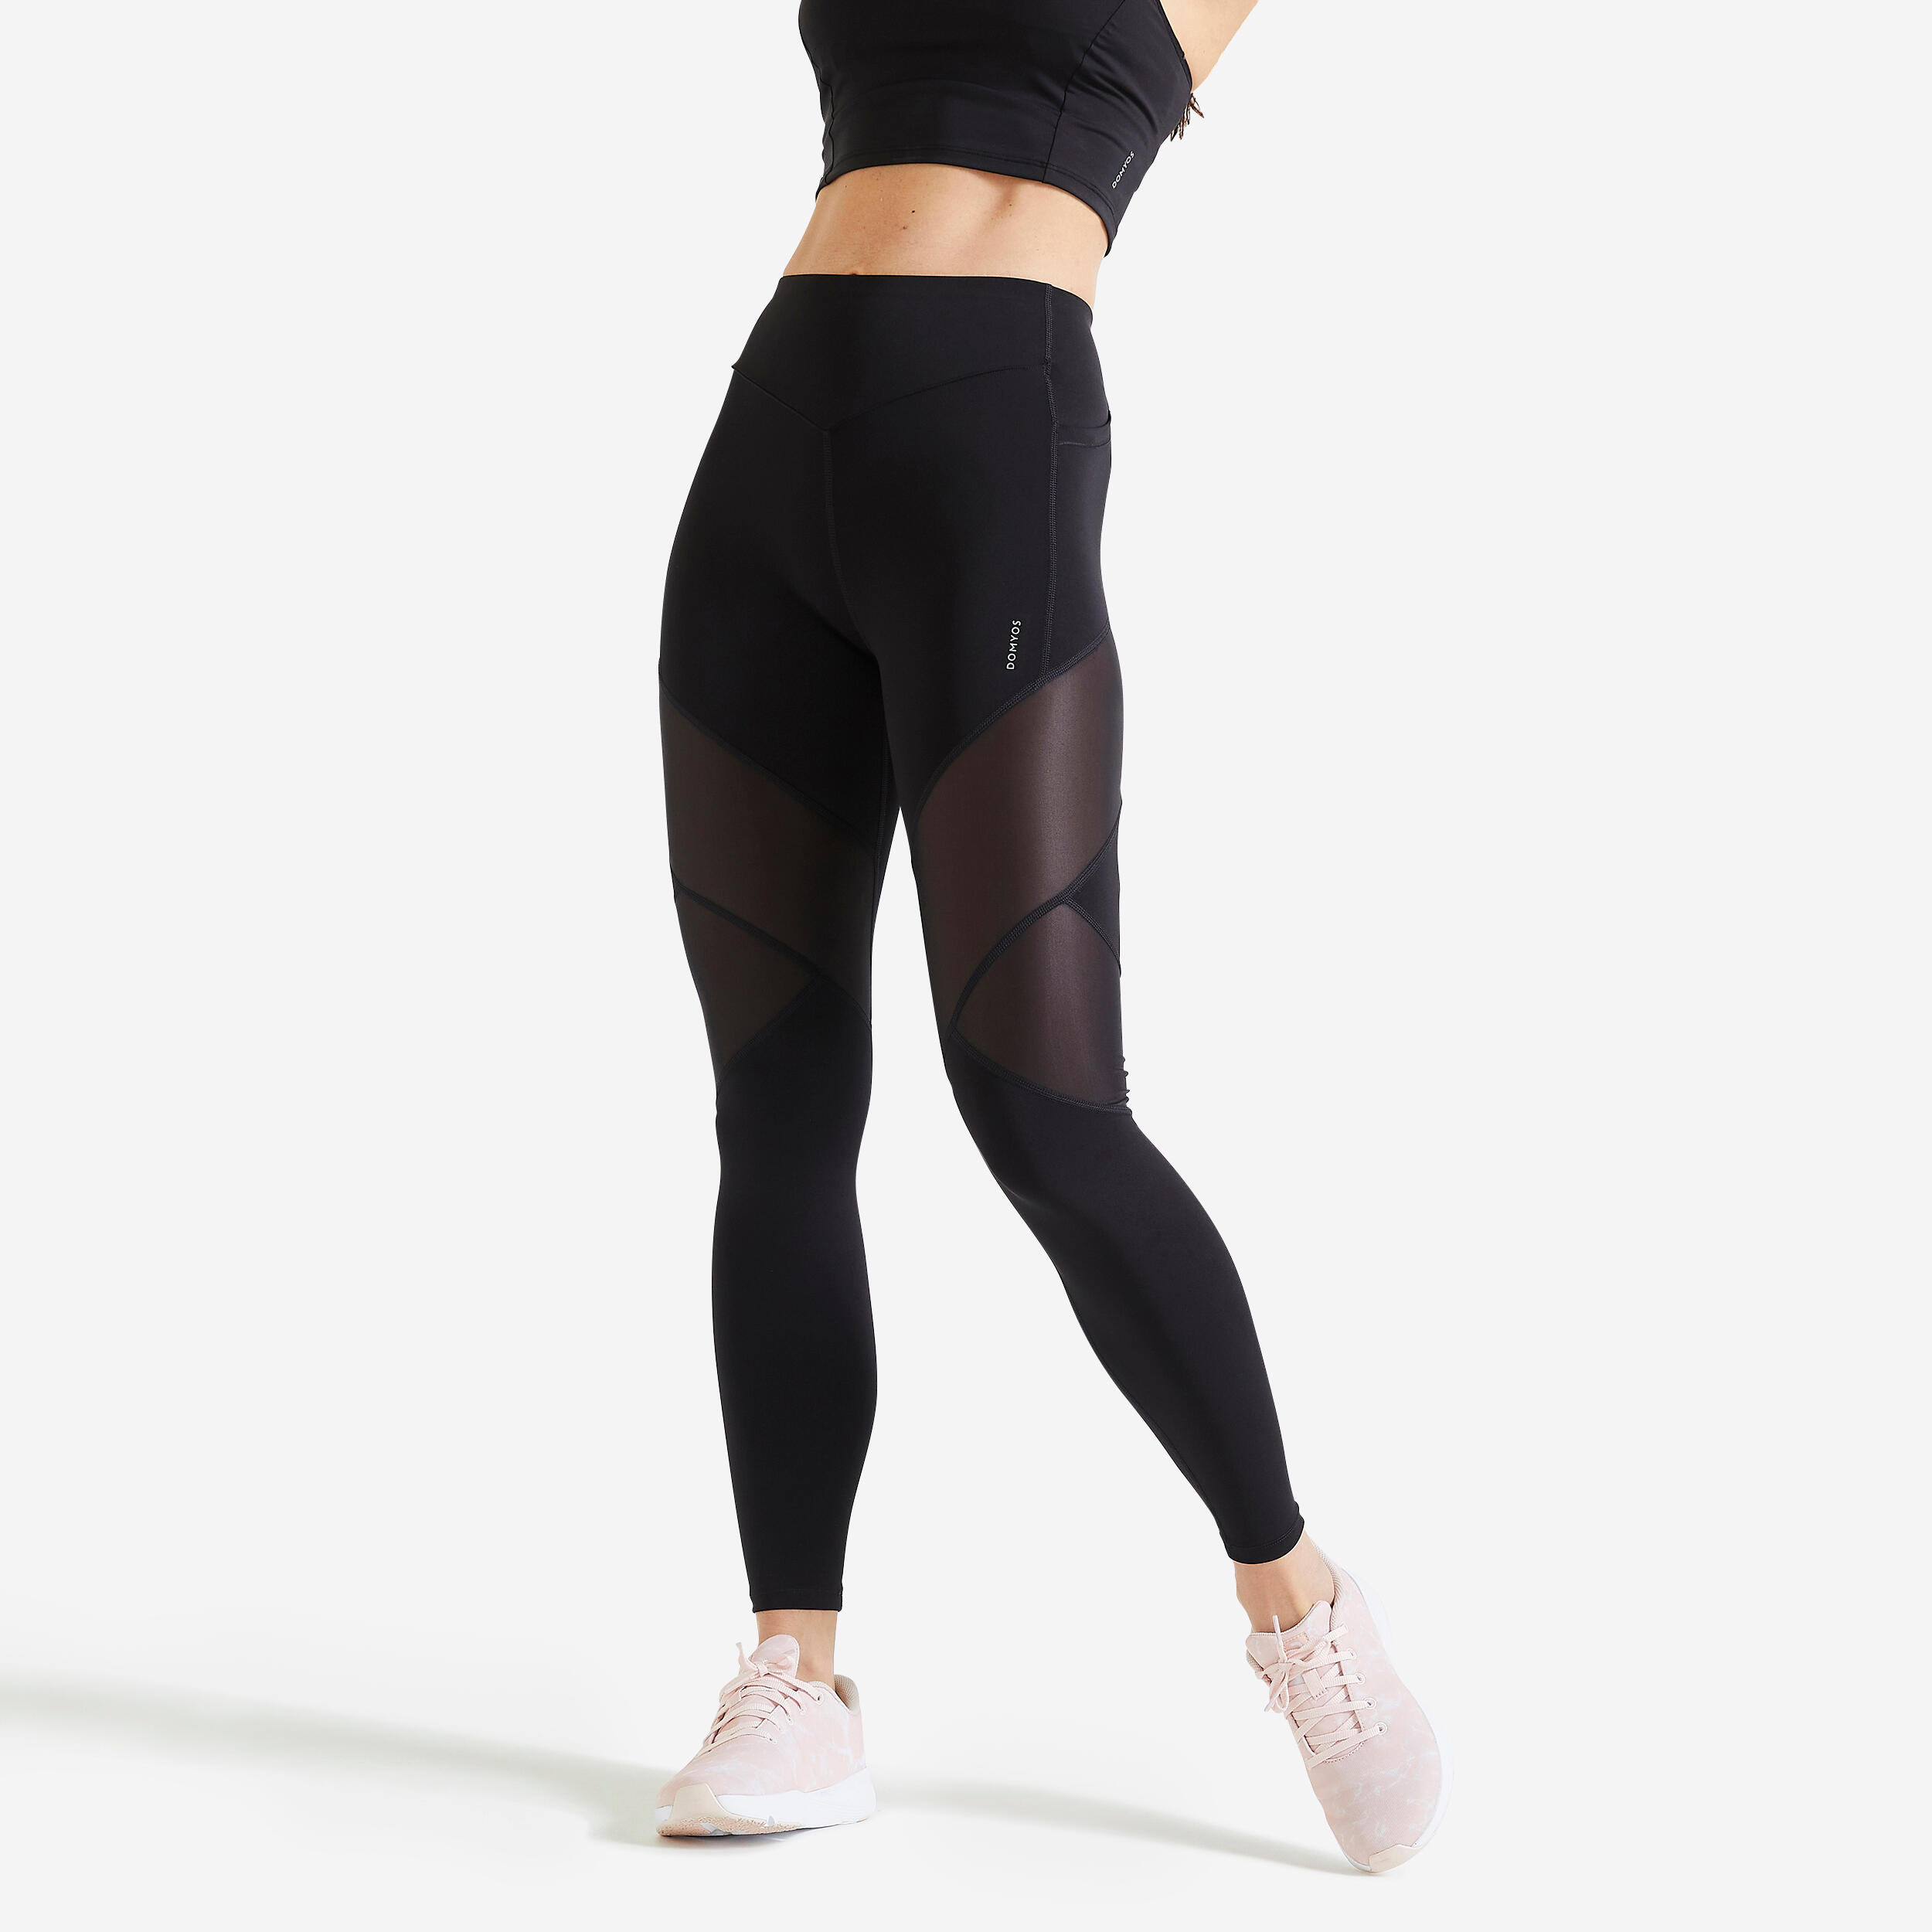 Legging sport taille haute femme – FTI 500 noir - [EN] smoked black -  Domyos - Décathlon